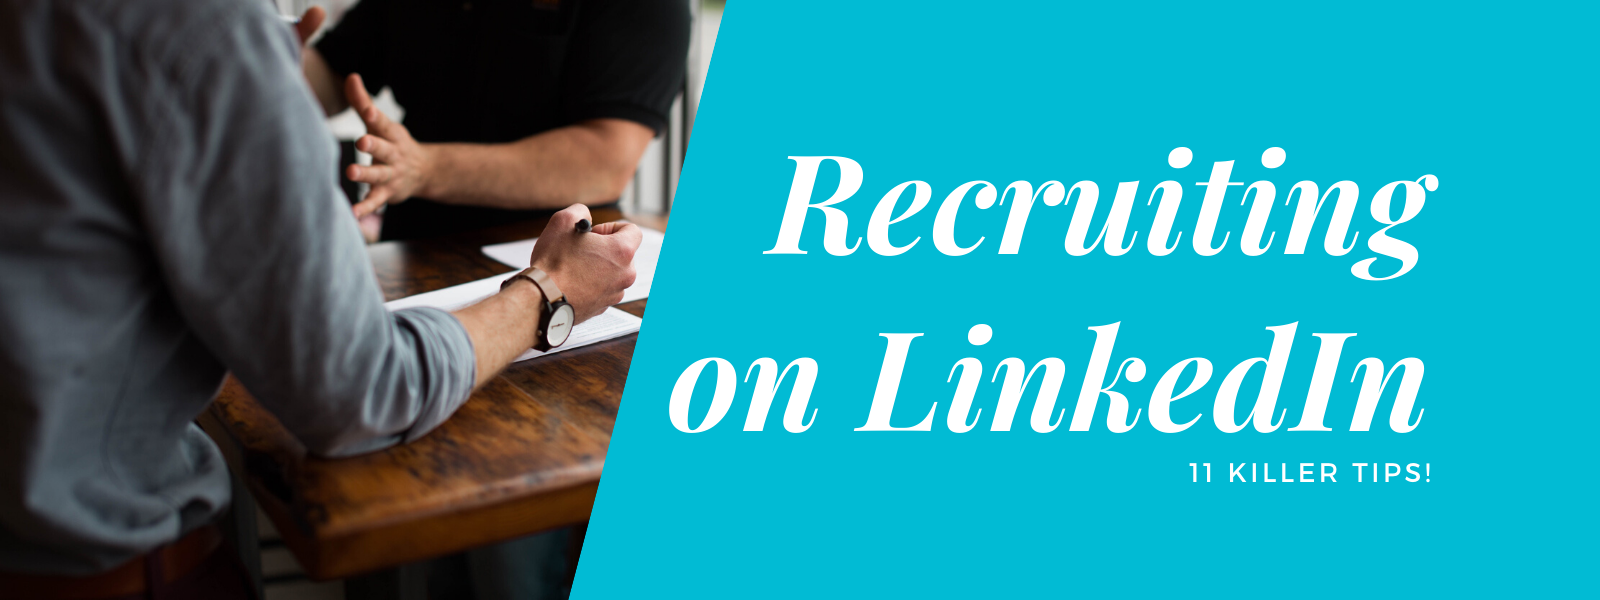 Recruiting on LinkedIn tips